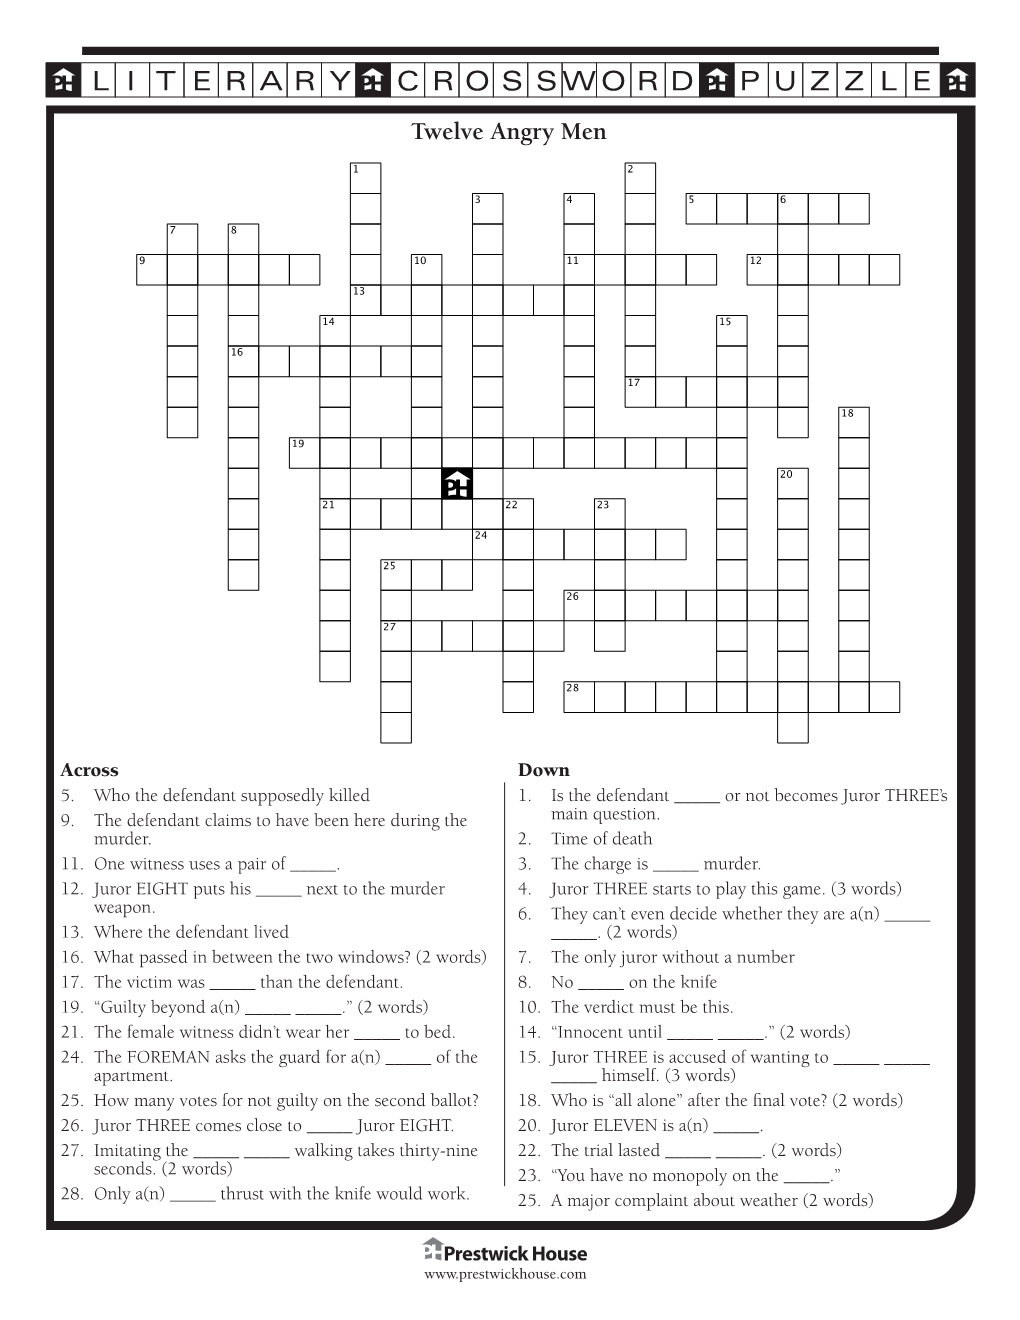 Twelve Angry Men Crossword Puzzle